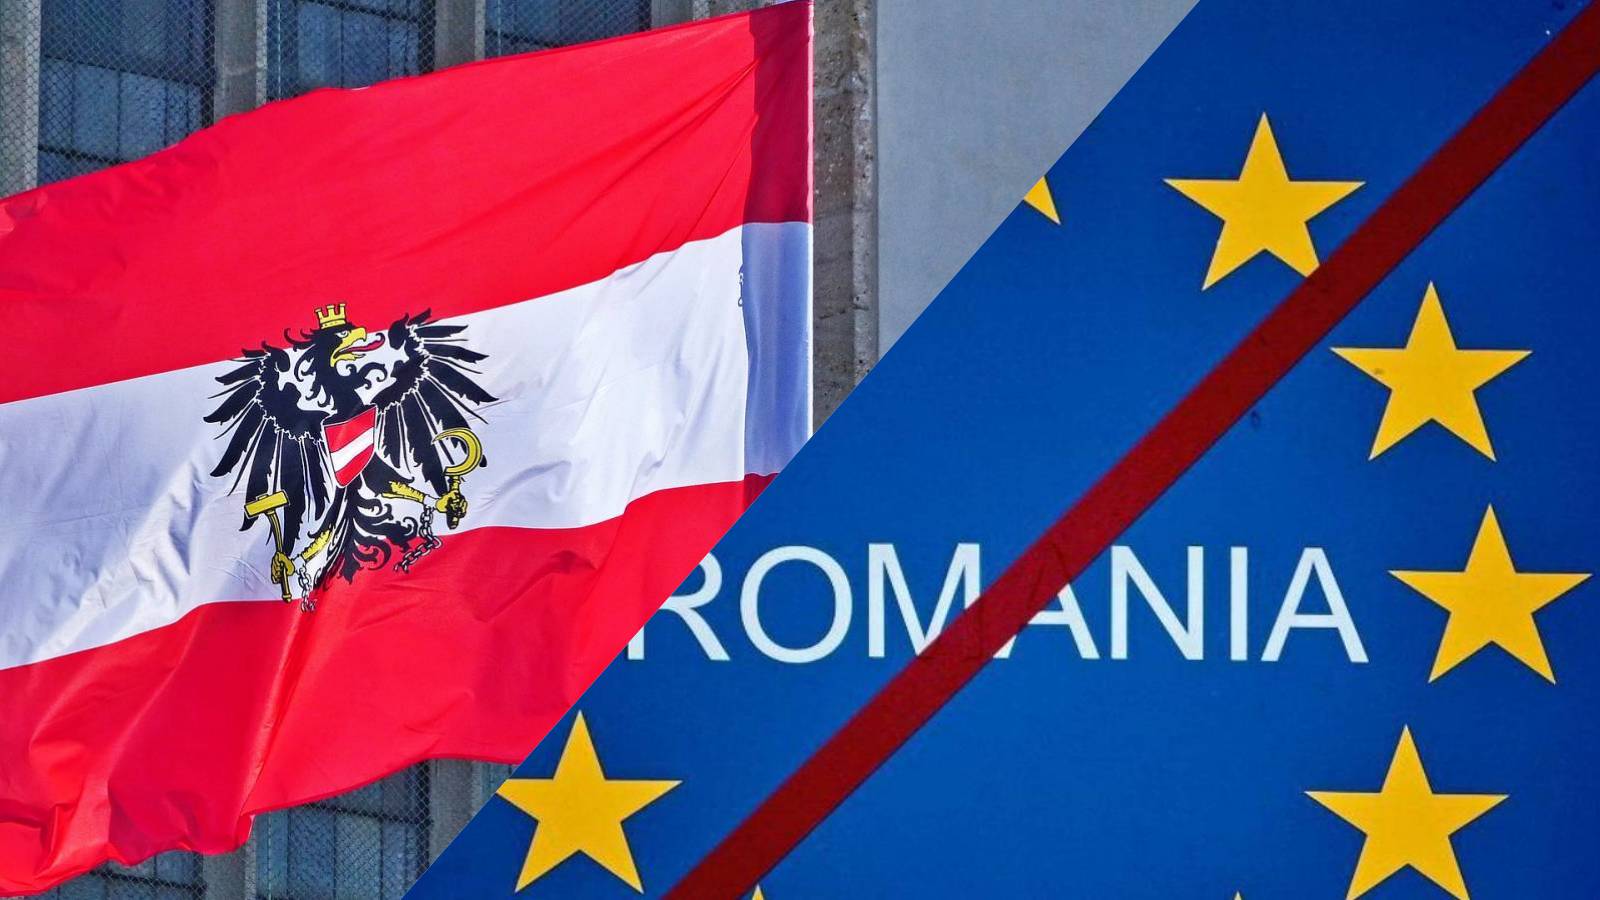 Austria Urgently Requests Important New Measures Blocking Romania's Schengen Accession